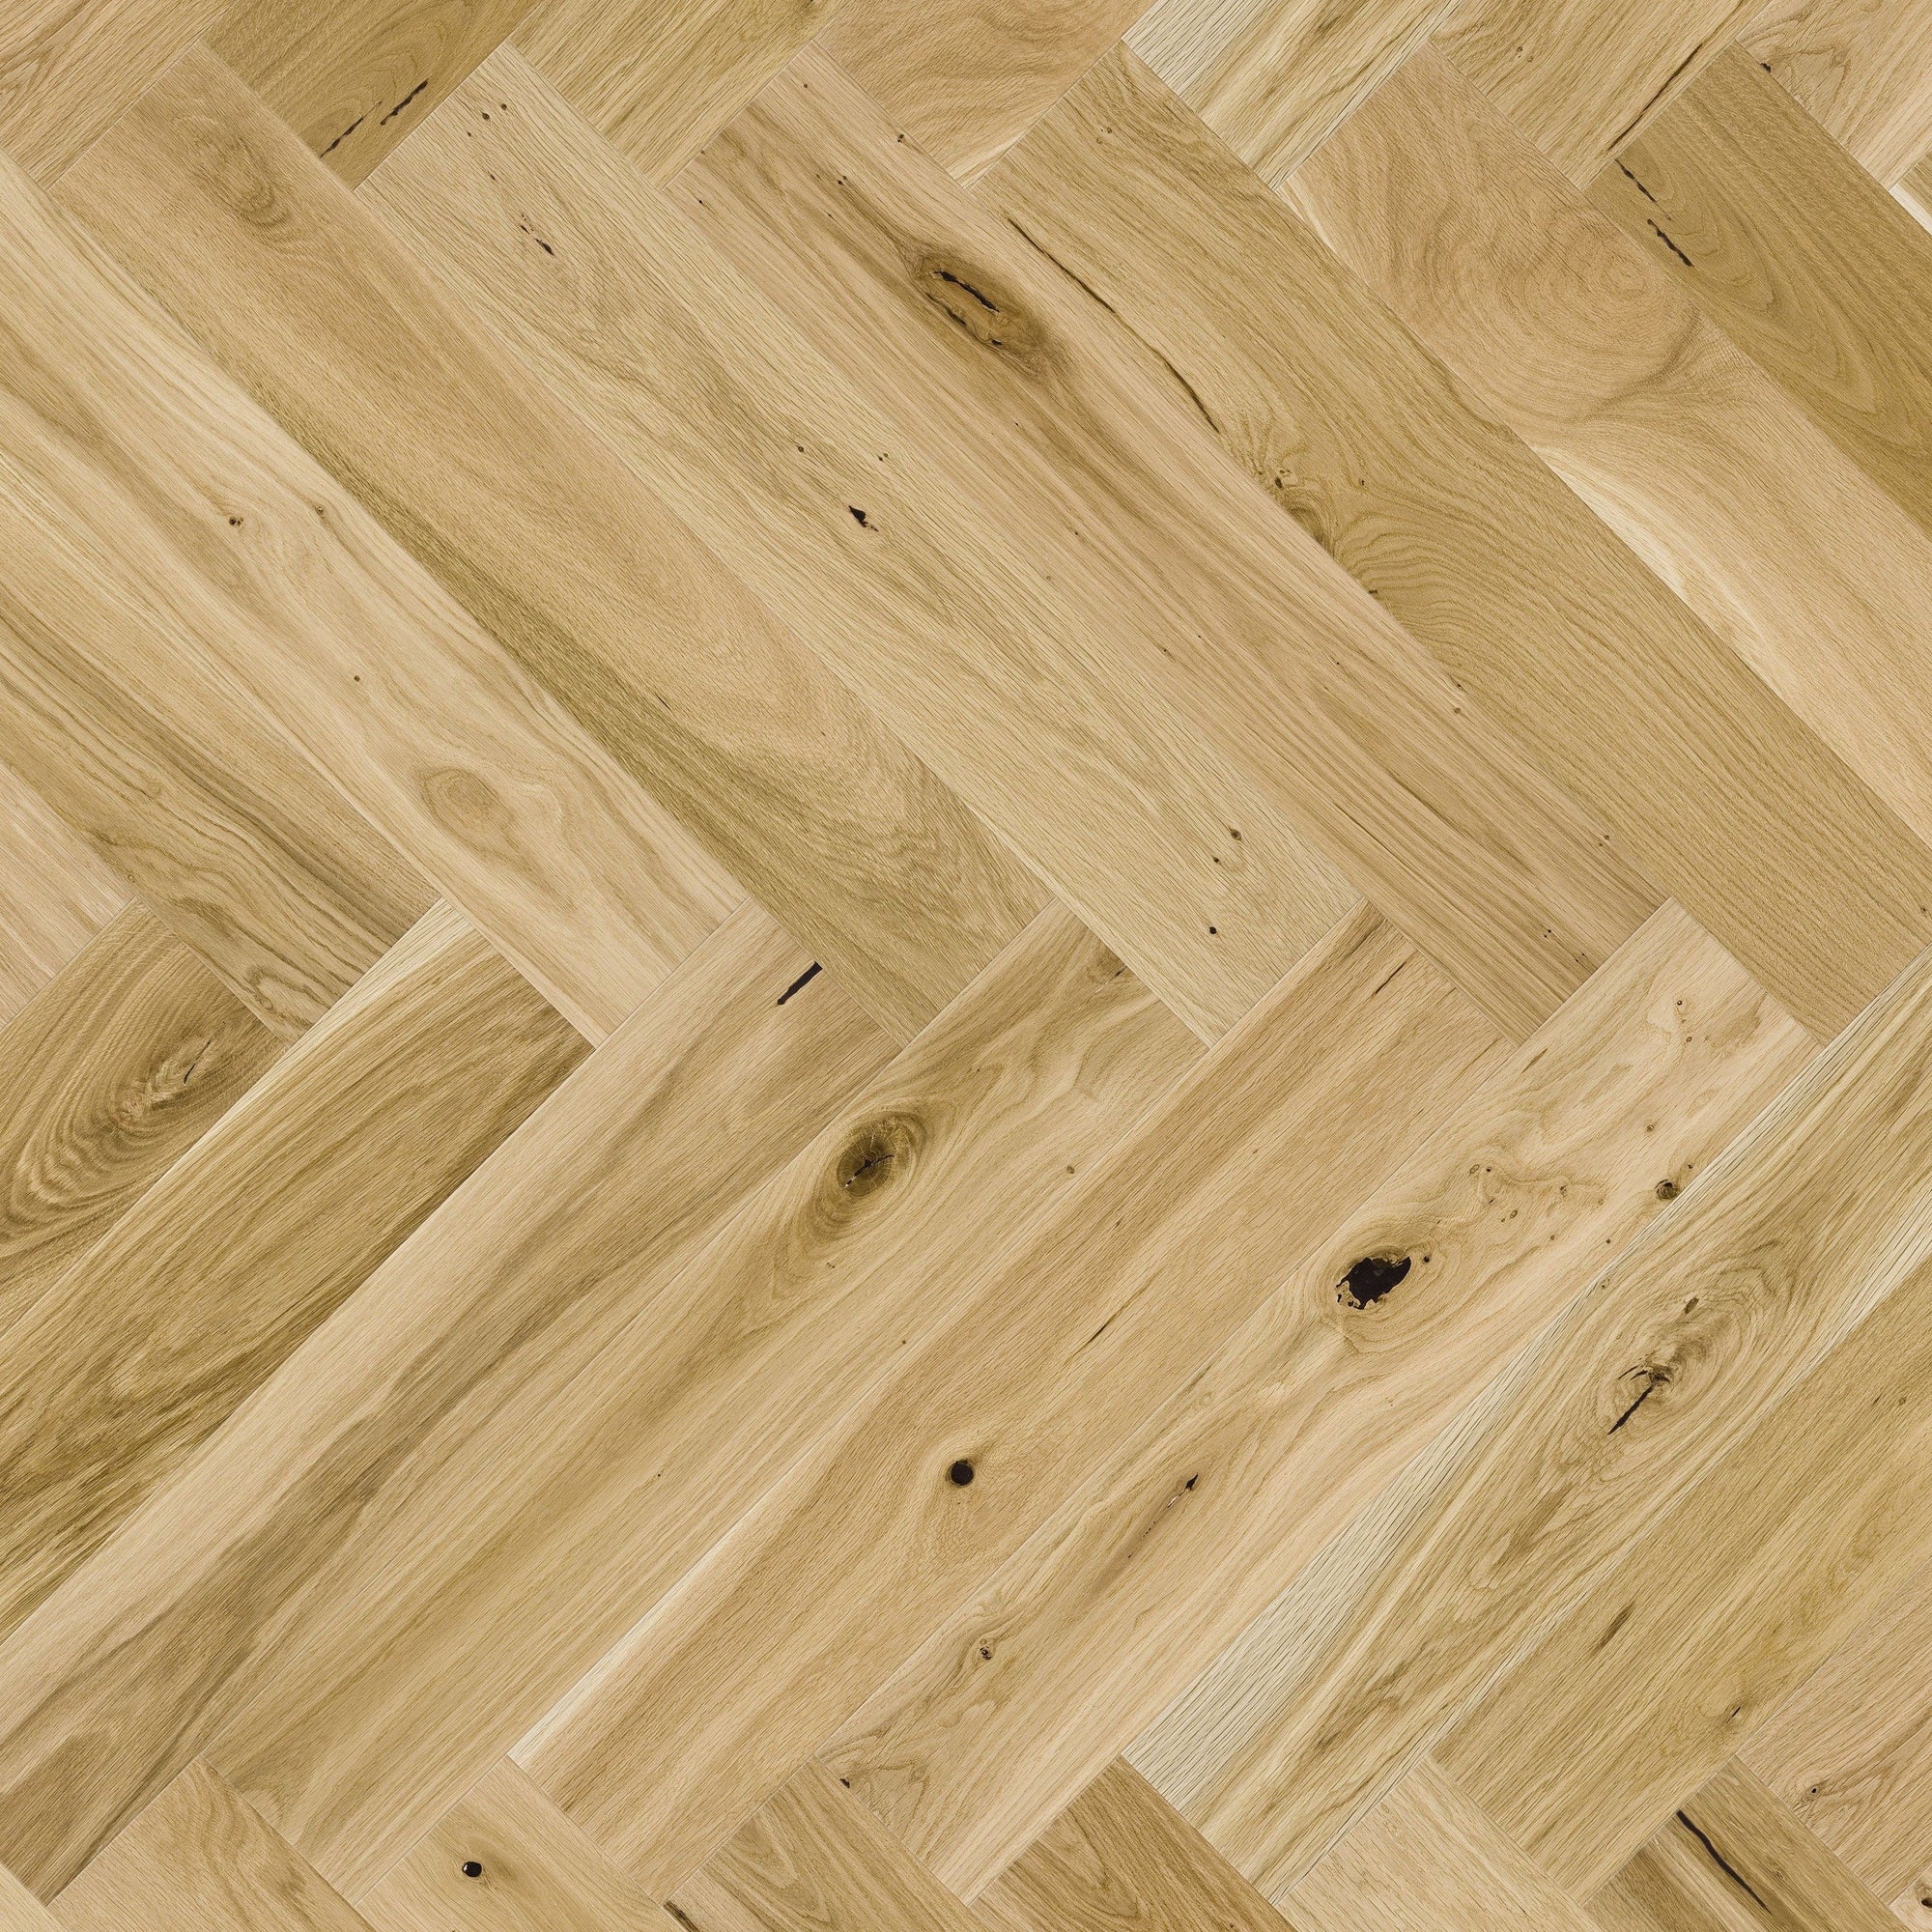 Amazing Free sample of Ashton & Rose Kirkham engineered hardwood floor from our Herringbone collection